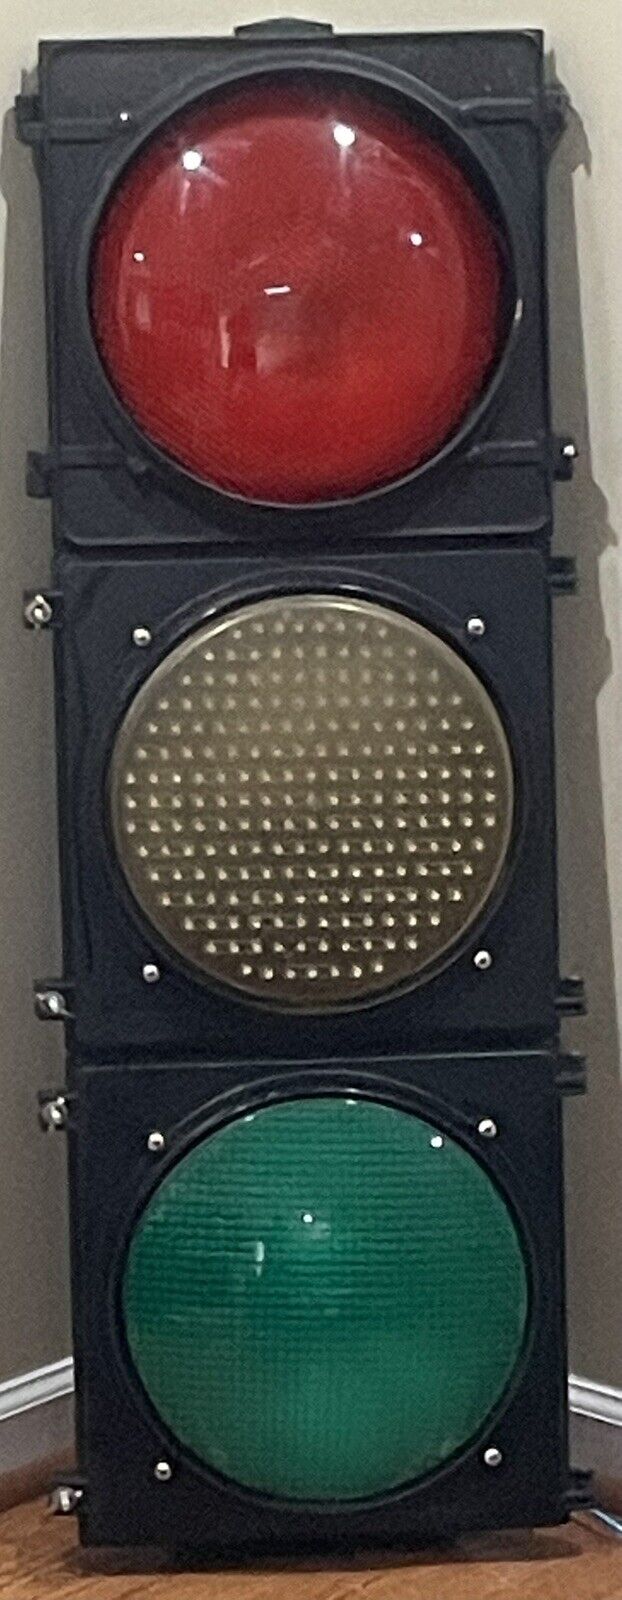 Retired Black South Carolina 12” LED Traffic Signal Red Yellow Green Stop Light